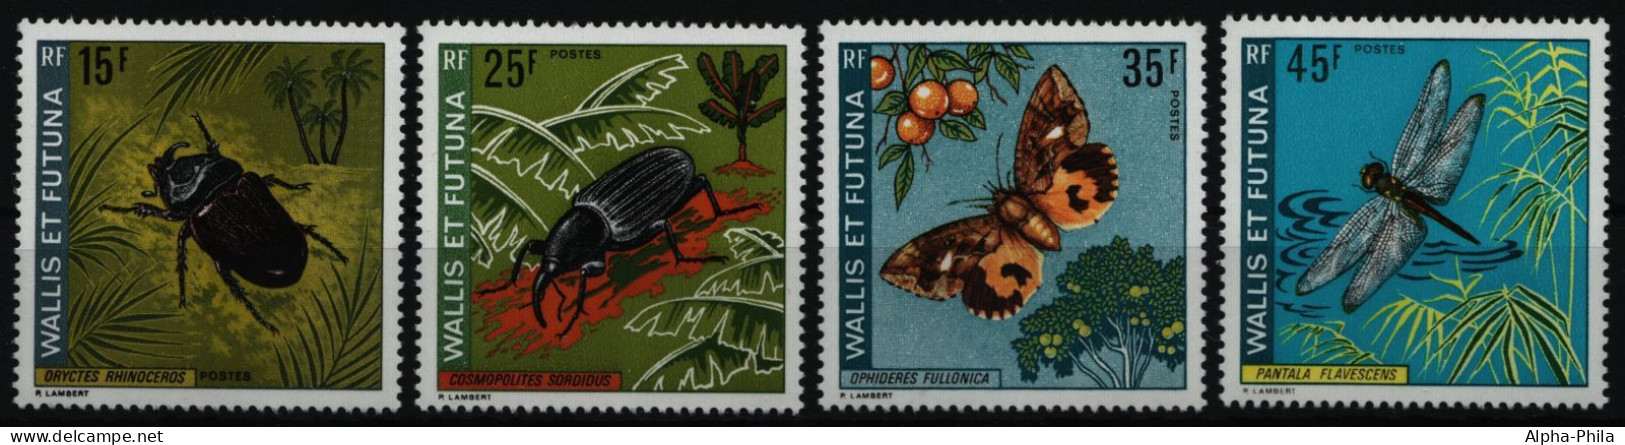 Wallis & Futuna 1974 - Mi-Nr. 254-257 ** - MNH - Insekten / Insects - Nuovi